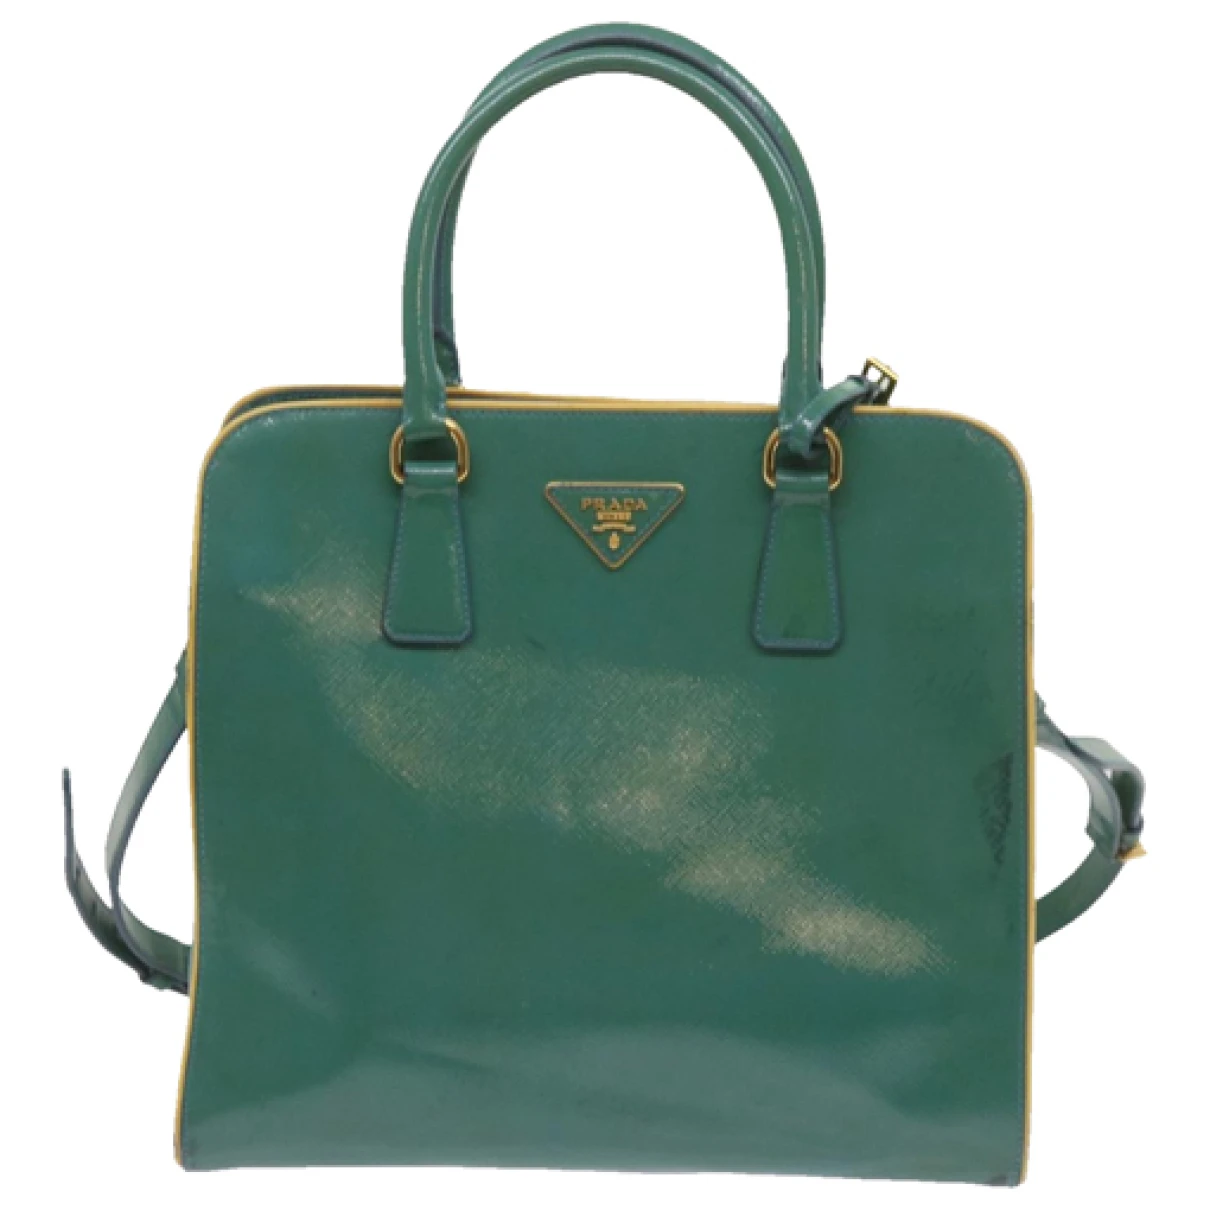 Pre-owned Prada Saffiano Leather Handbag In Green